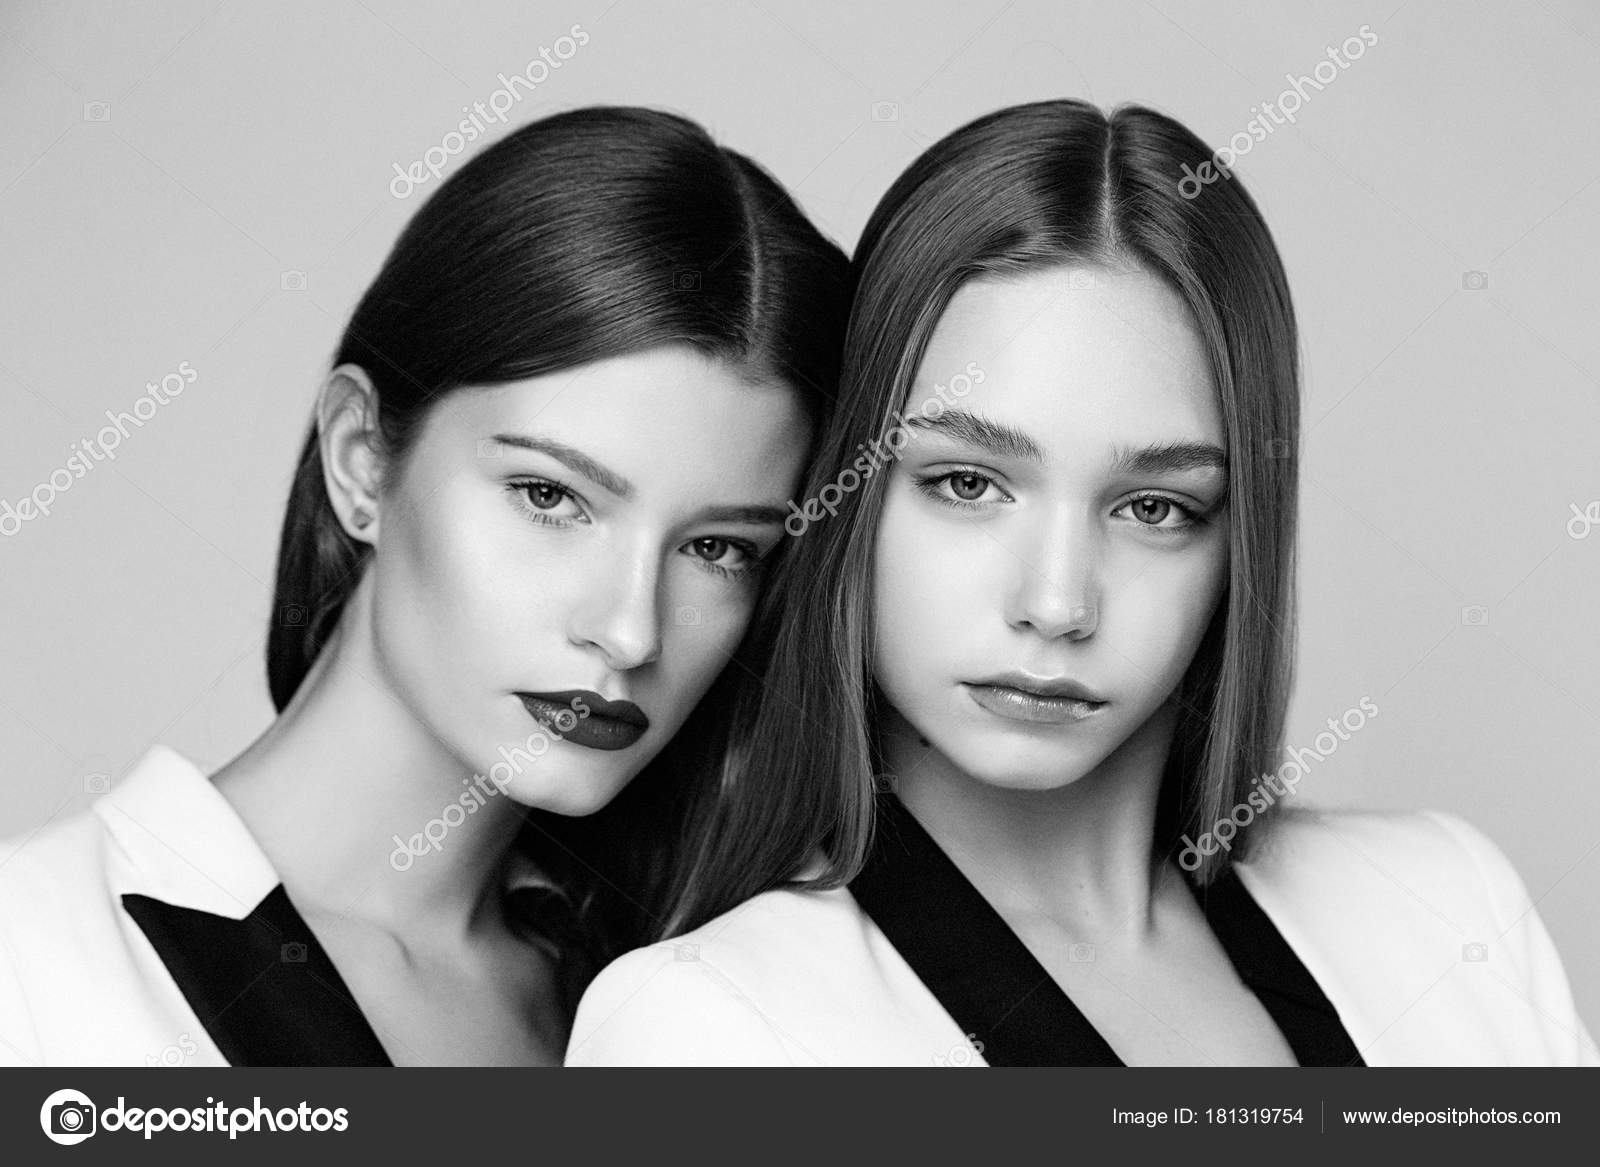 Emotion Concept Two Black White Portraits Stock Photo 272686985 |  Shutterstock